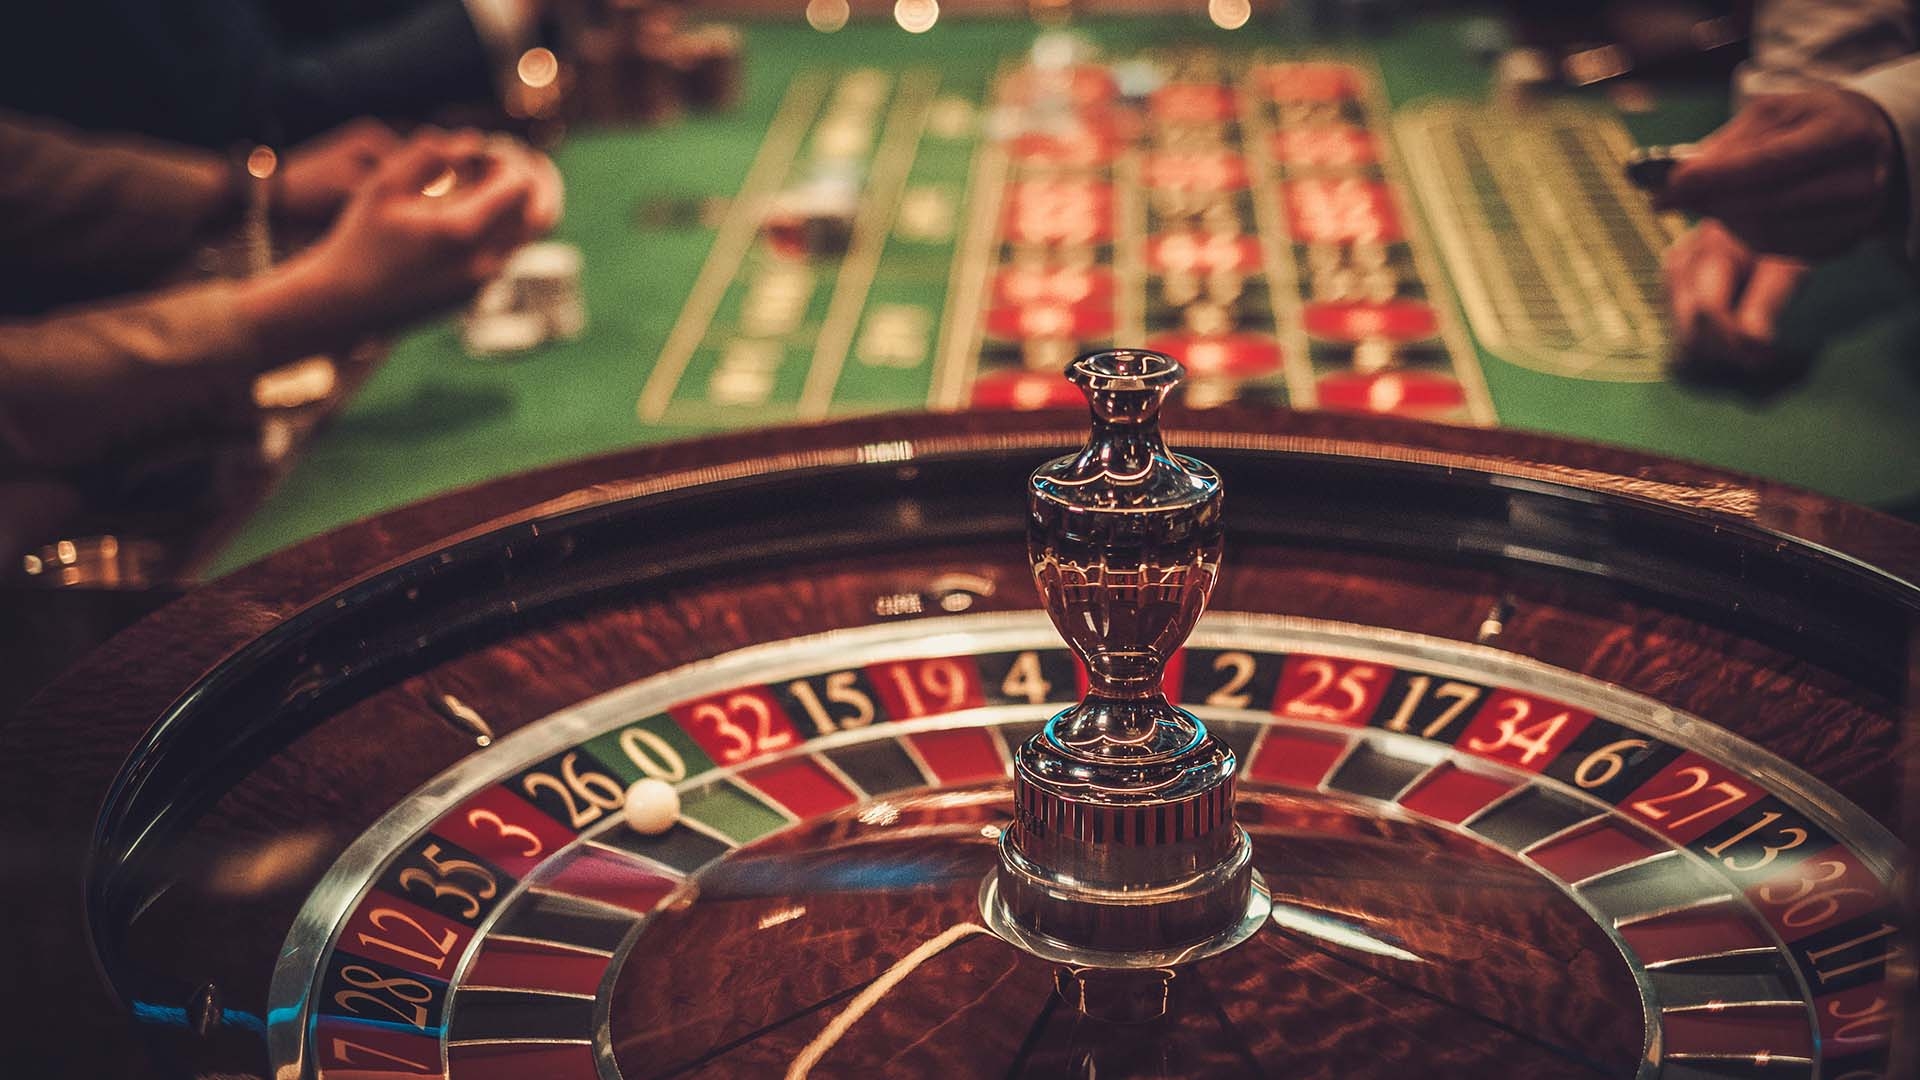 New Independent Online Casino Gambling